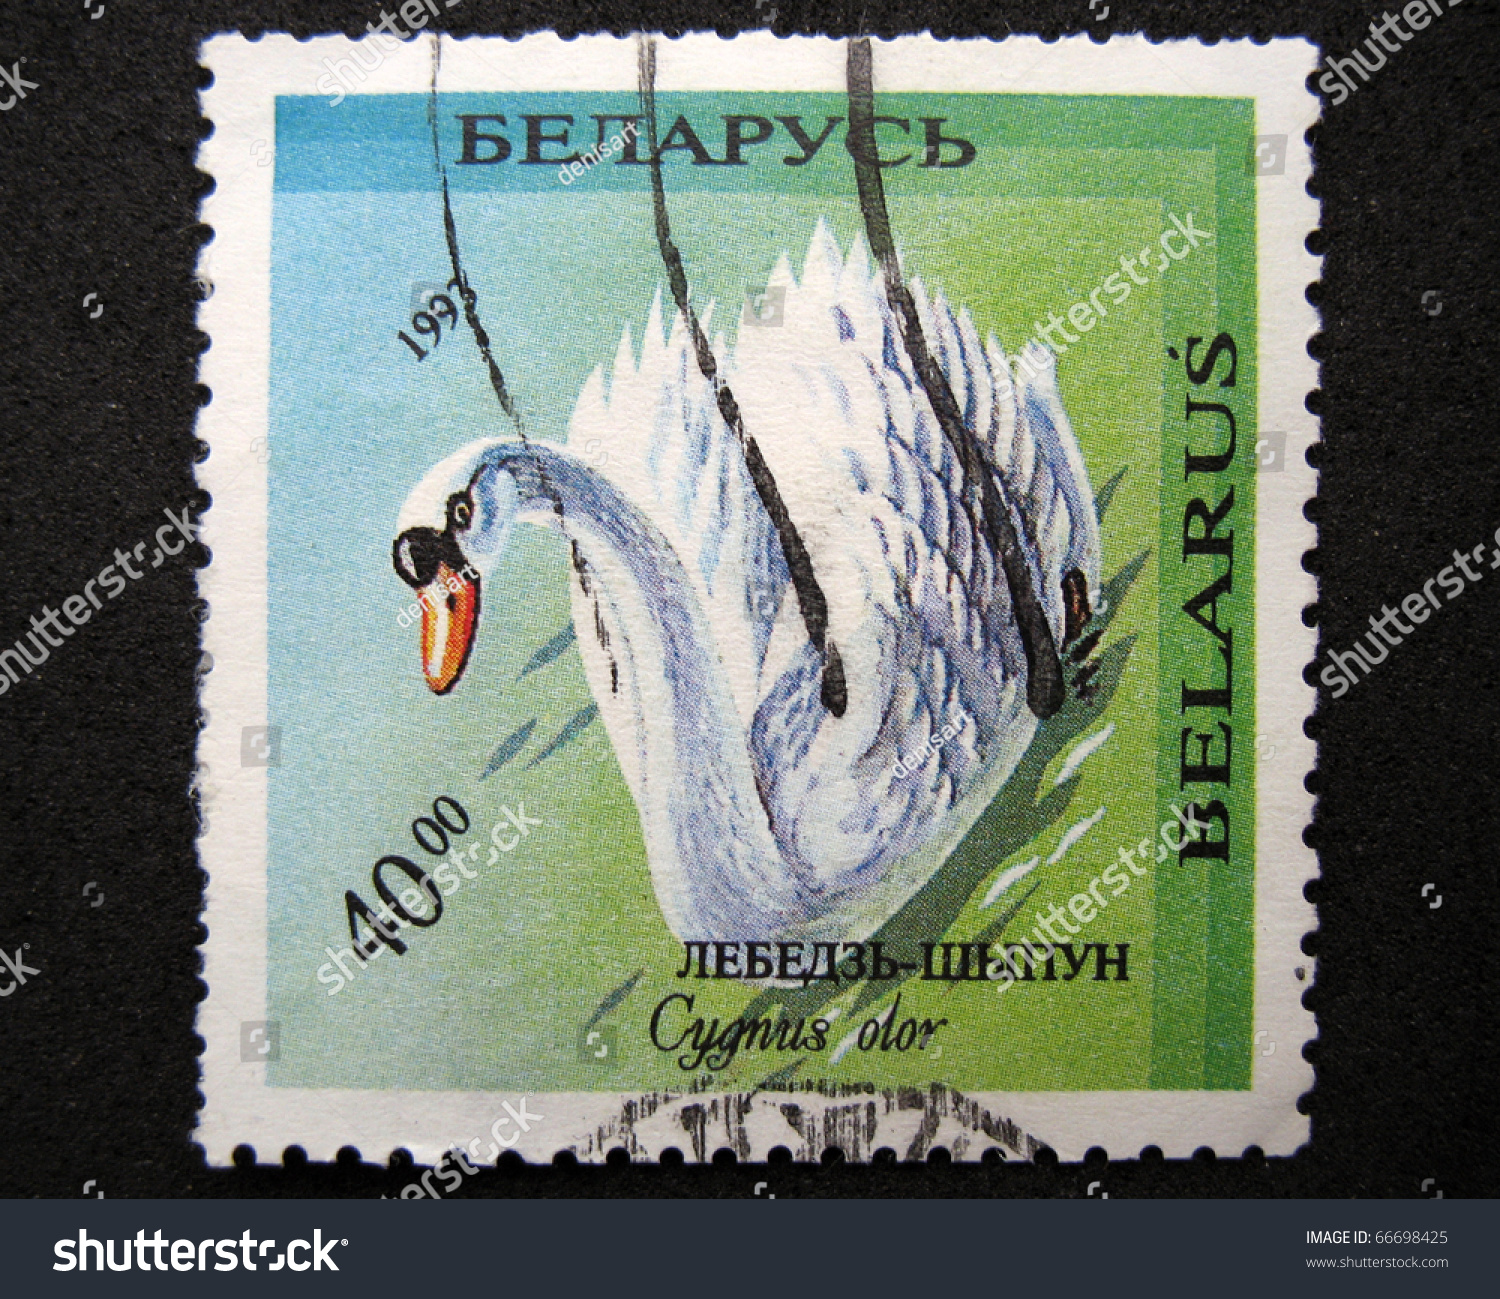 Belarus Circa 1993 Stamp Printed Belarus Stock Photo 66698425 ...